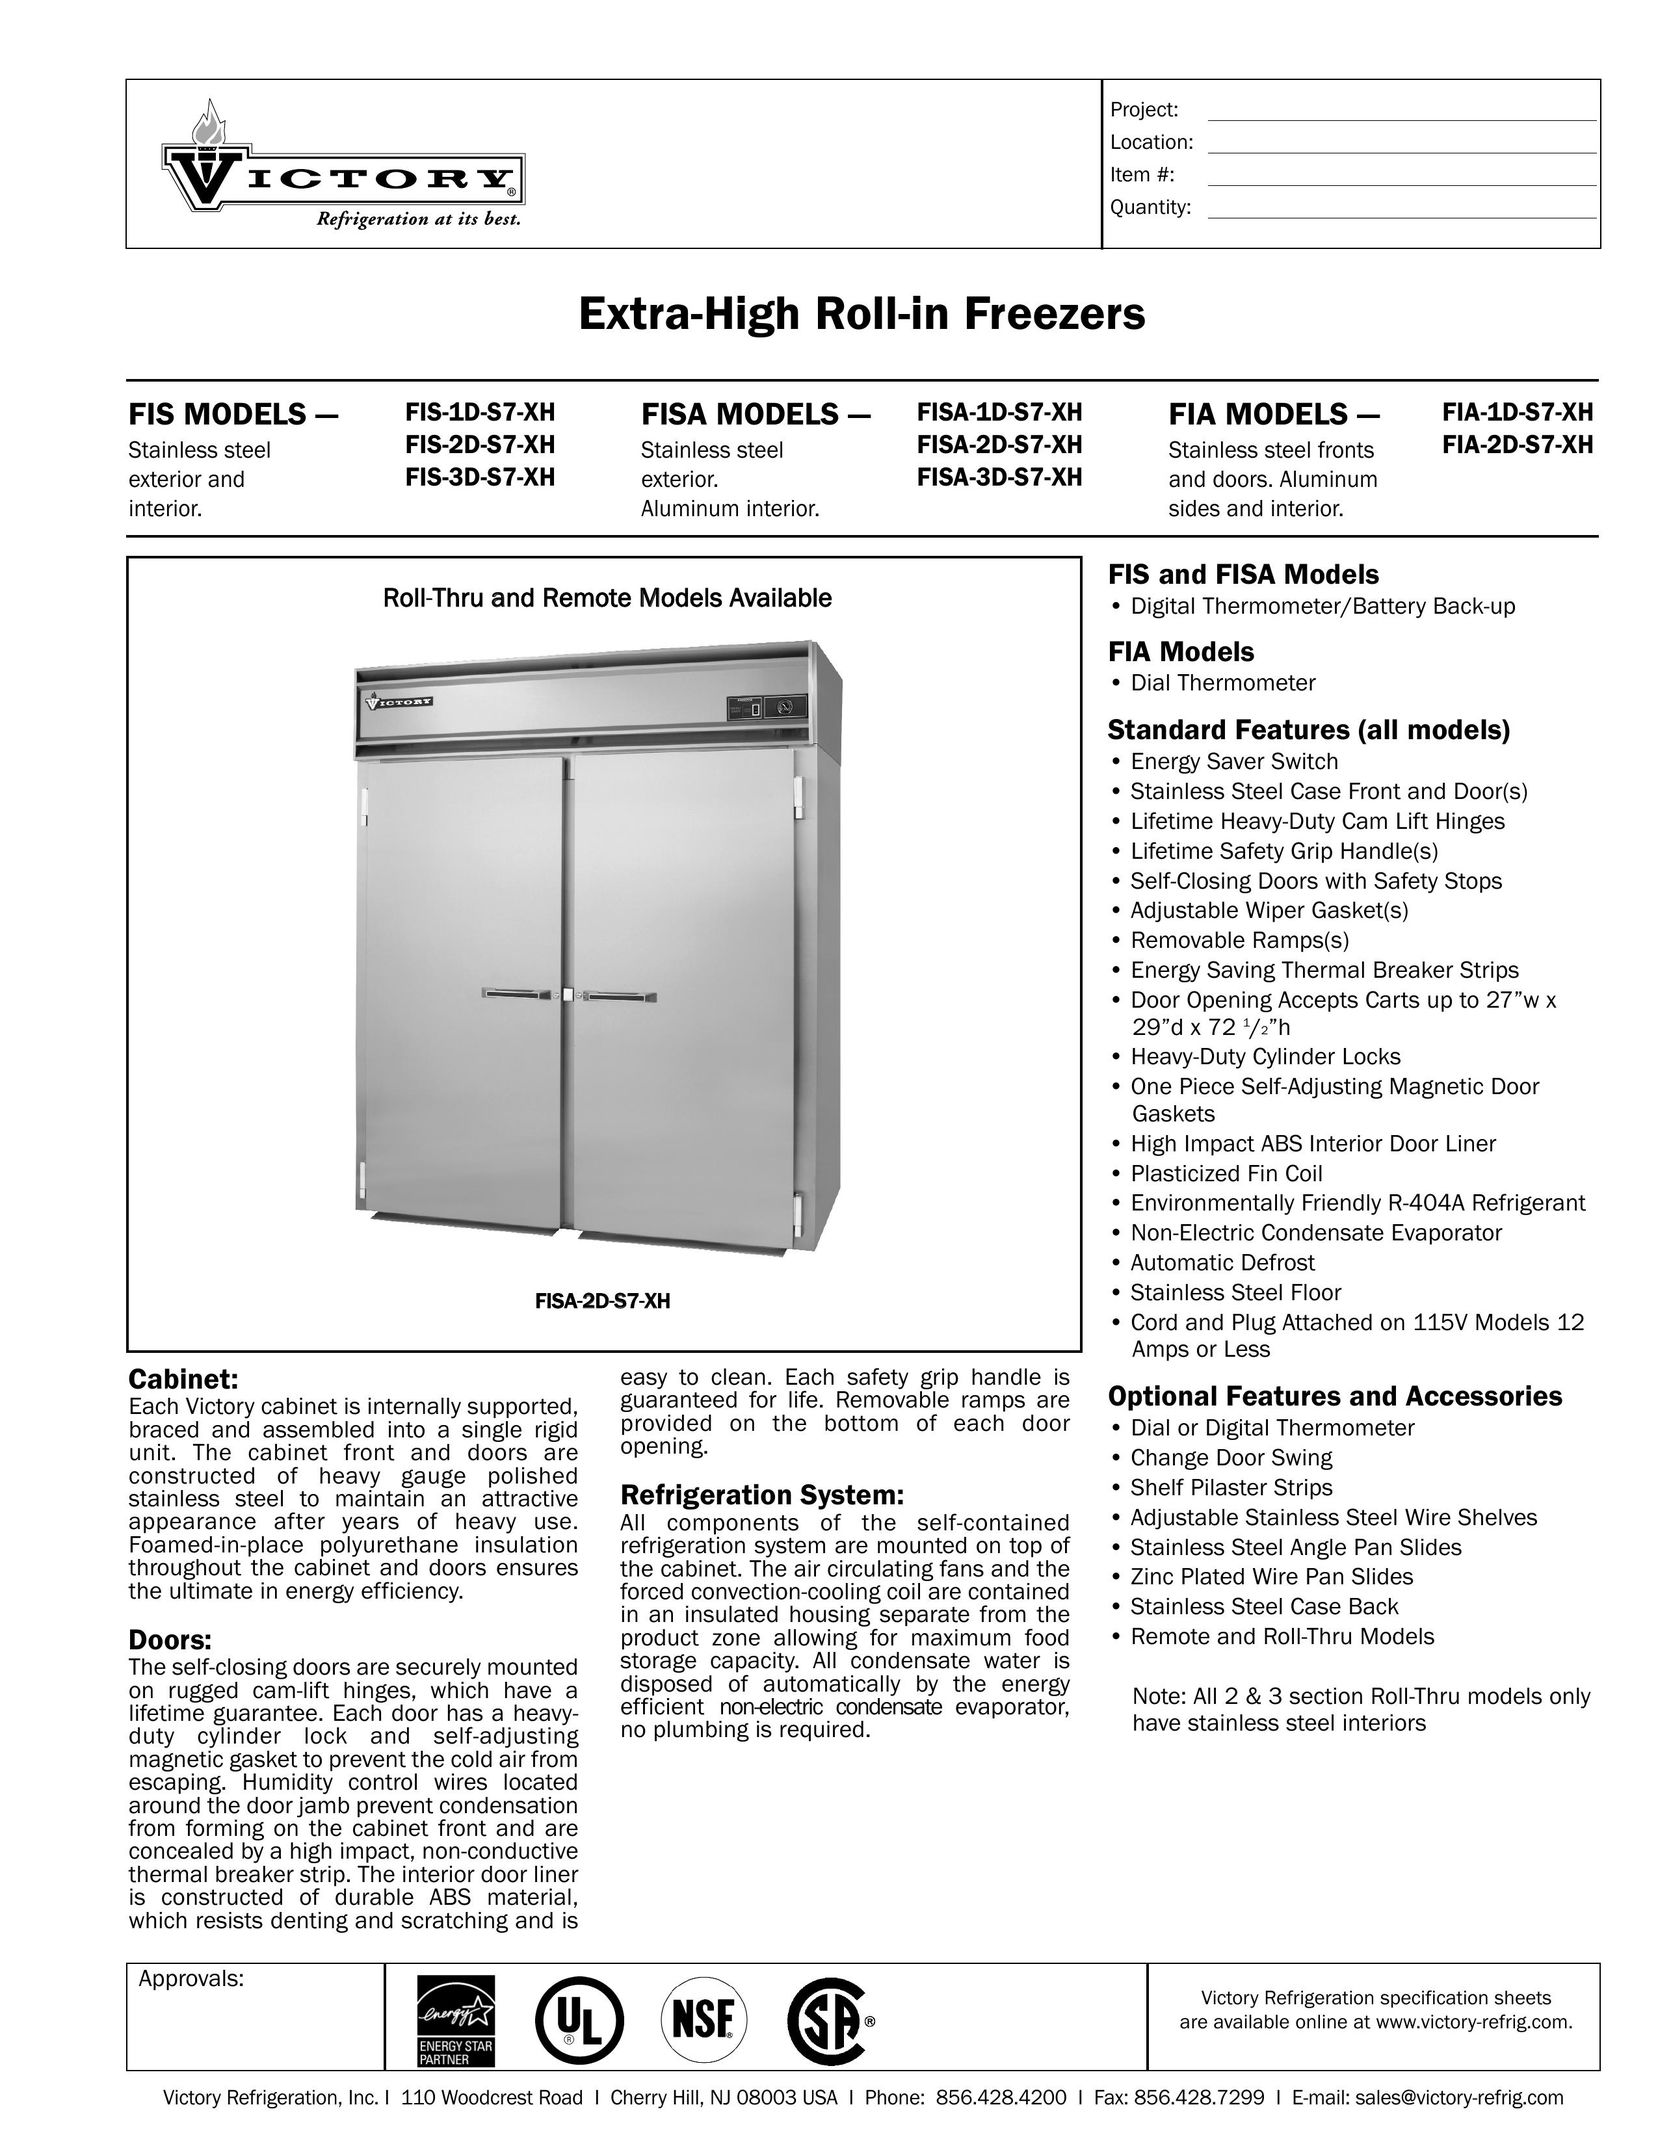 Victory Refrigeration FIA-2D-S7-XH Freezer User Manual